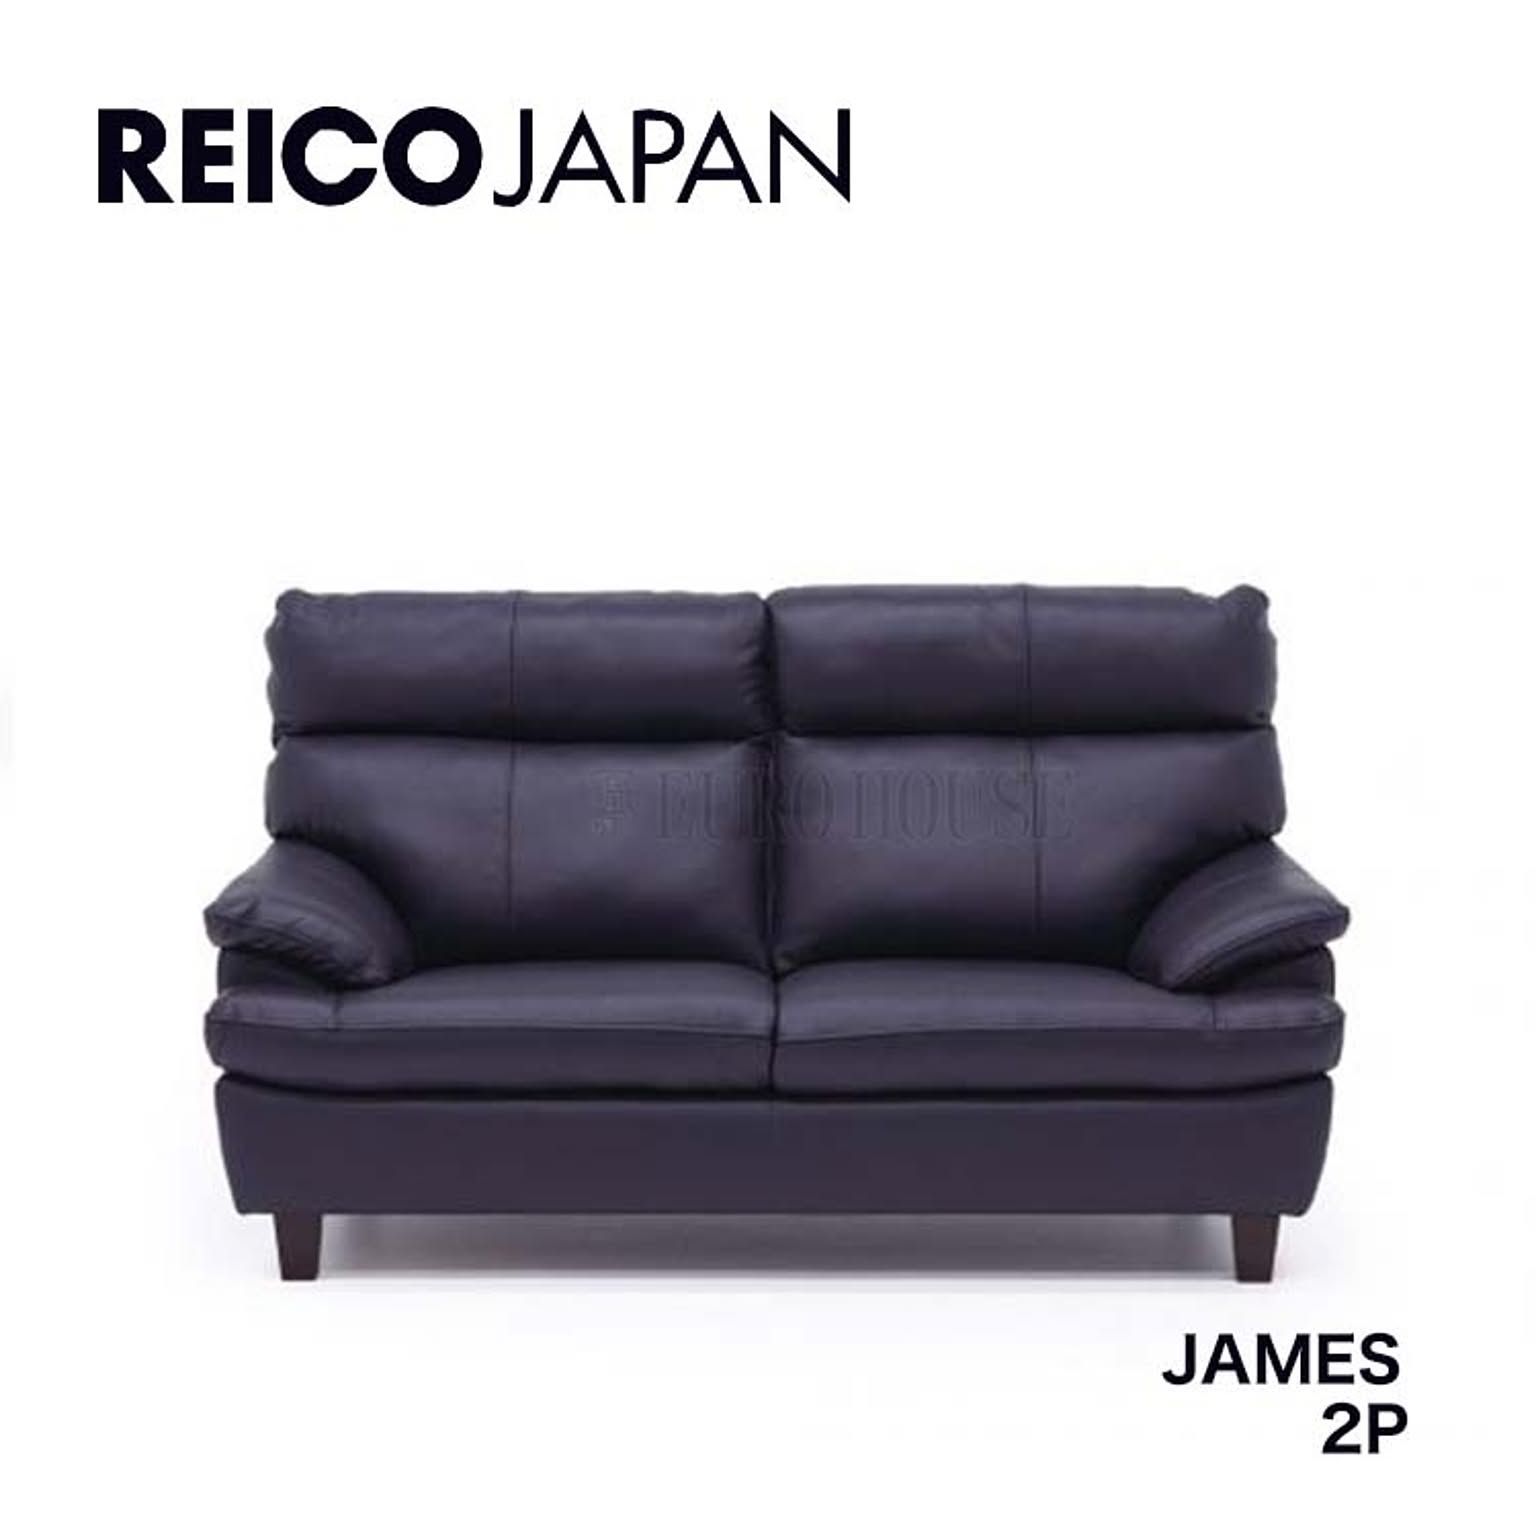 2Pソファ 2人掛け 2P ソファー ジェームス JAMES 革 leather NV リビング シンプル レイコージャパン SHEER Reico Japan 